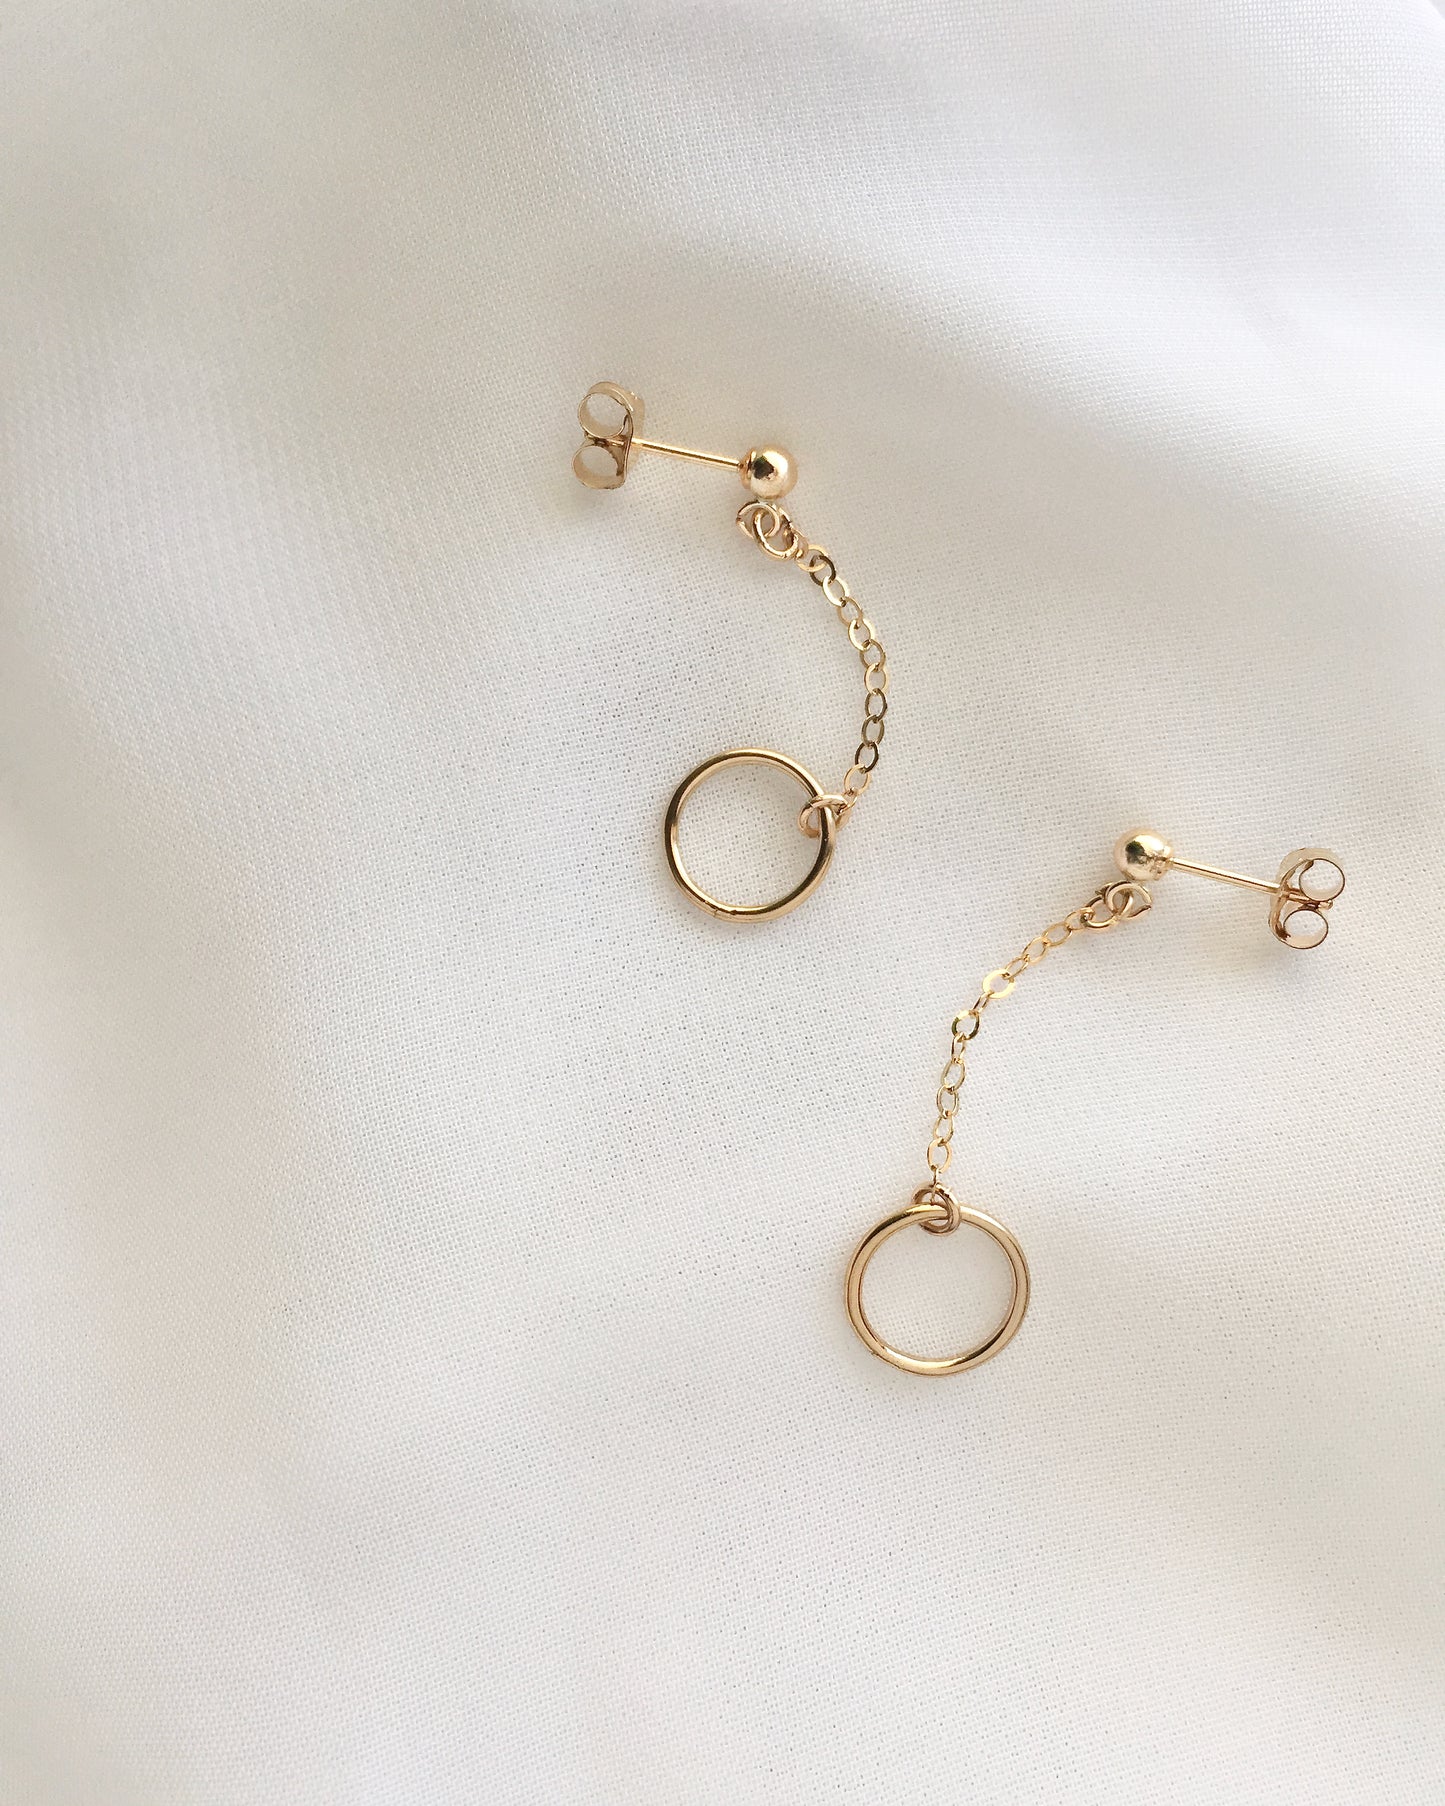 Dainty Dangle Chain Earrings in Gold Filled or Sterling Silver | Simple Delicate Earrings | IB Jewelry